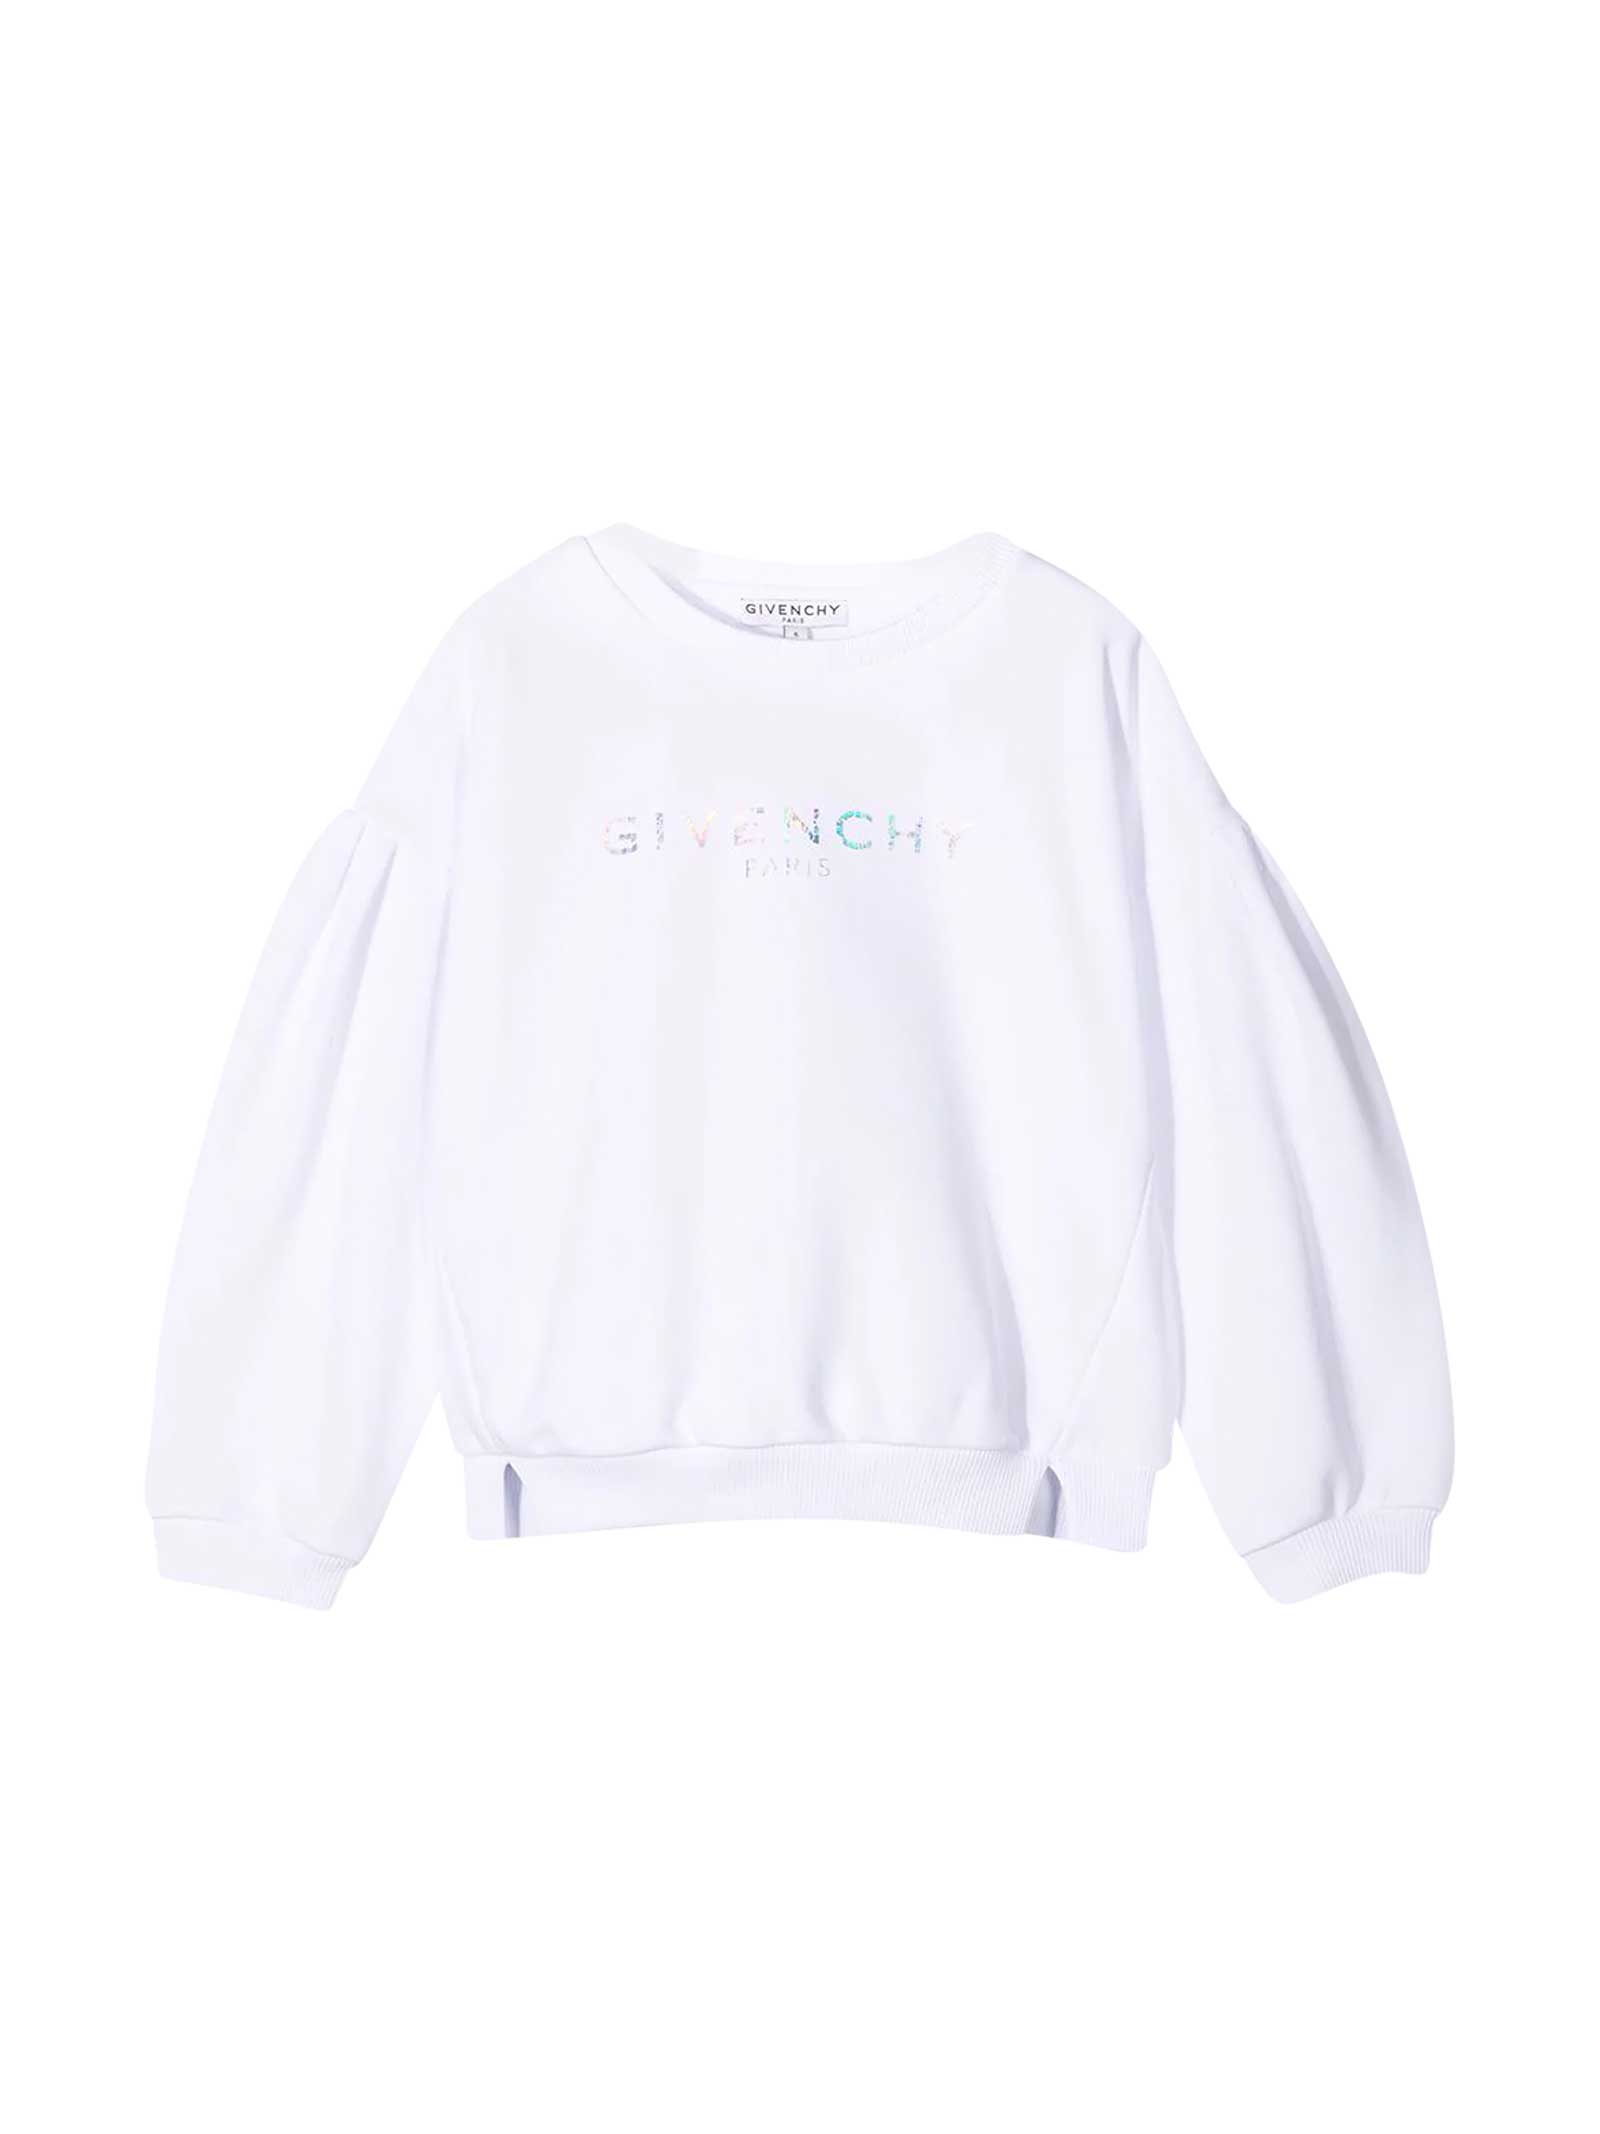 Givenchy White Teen Sweatshirt